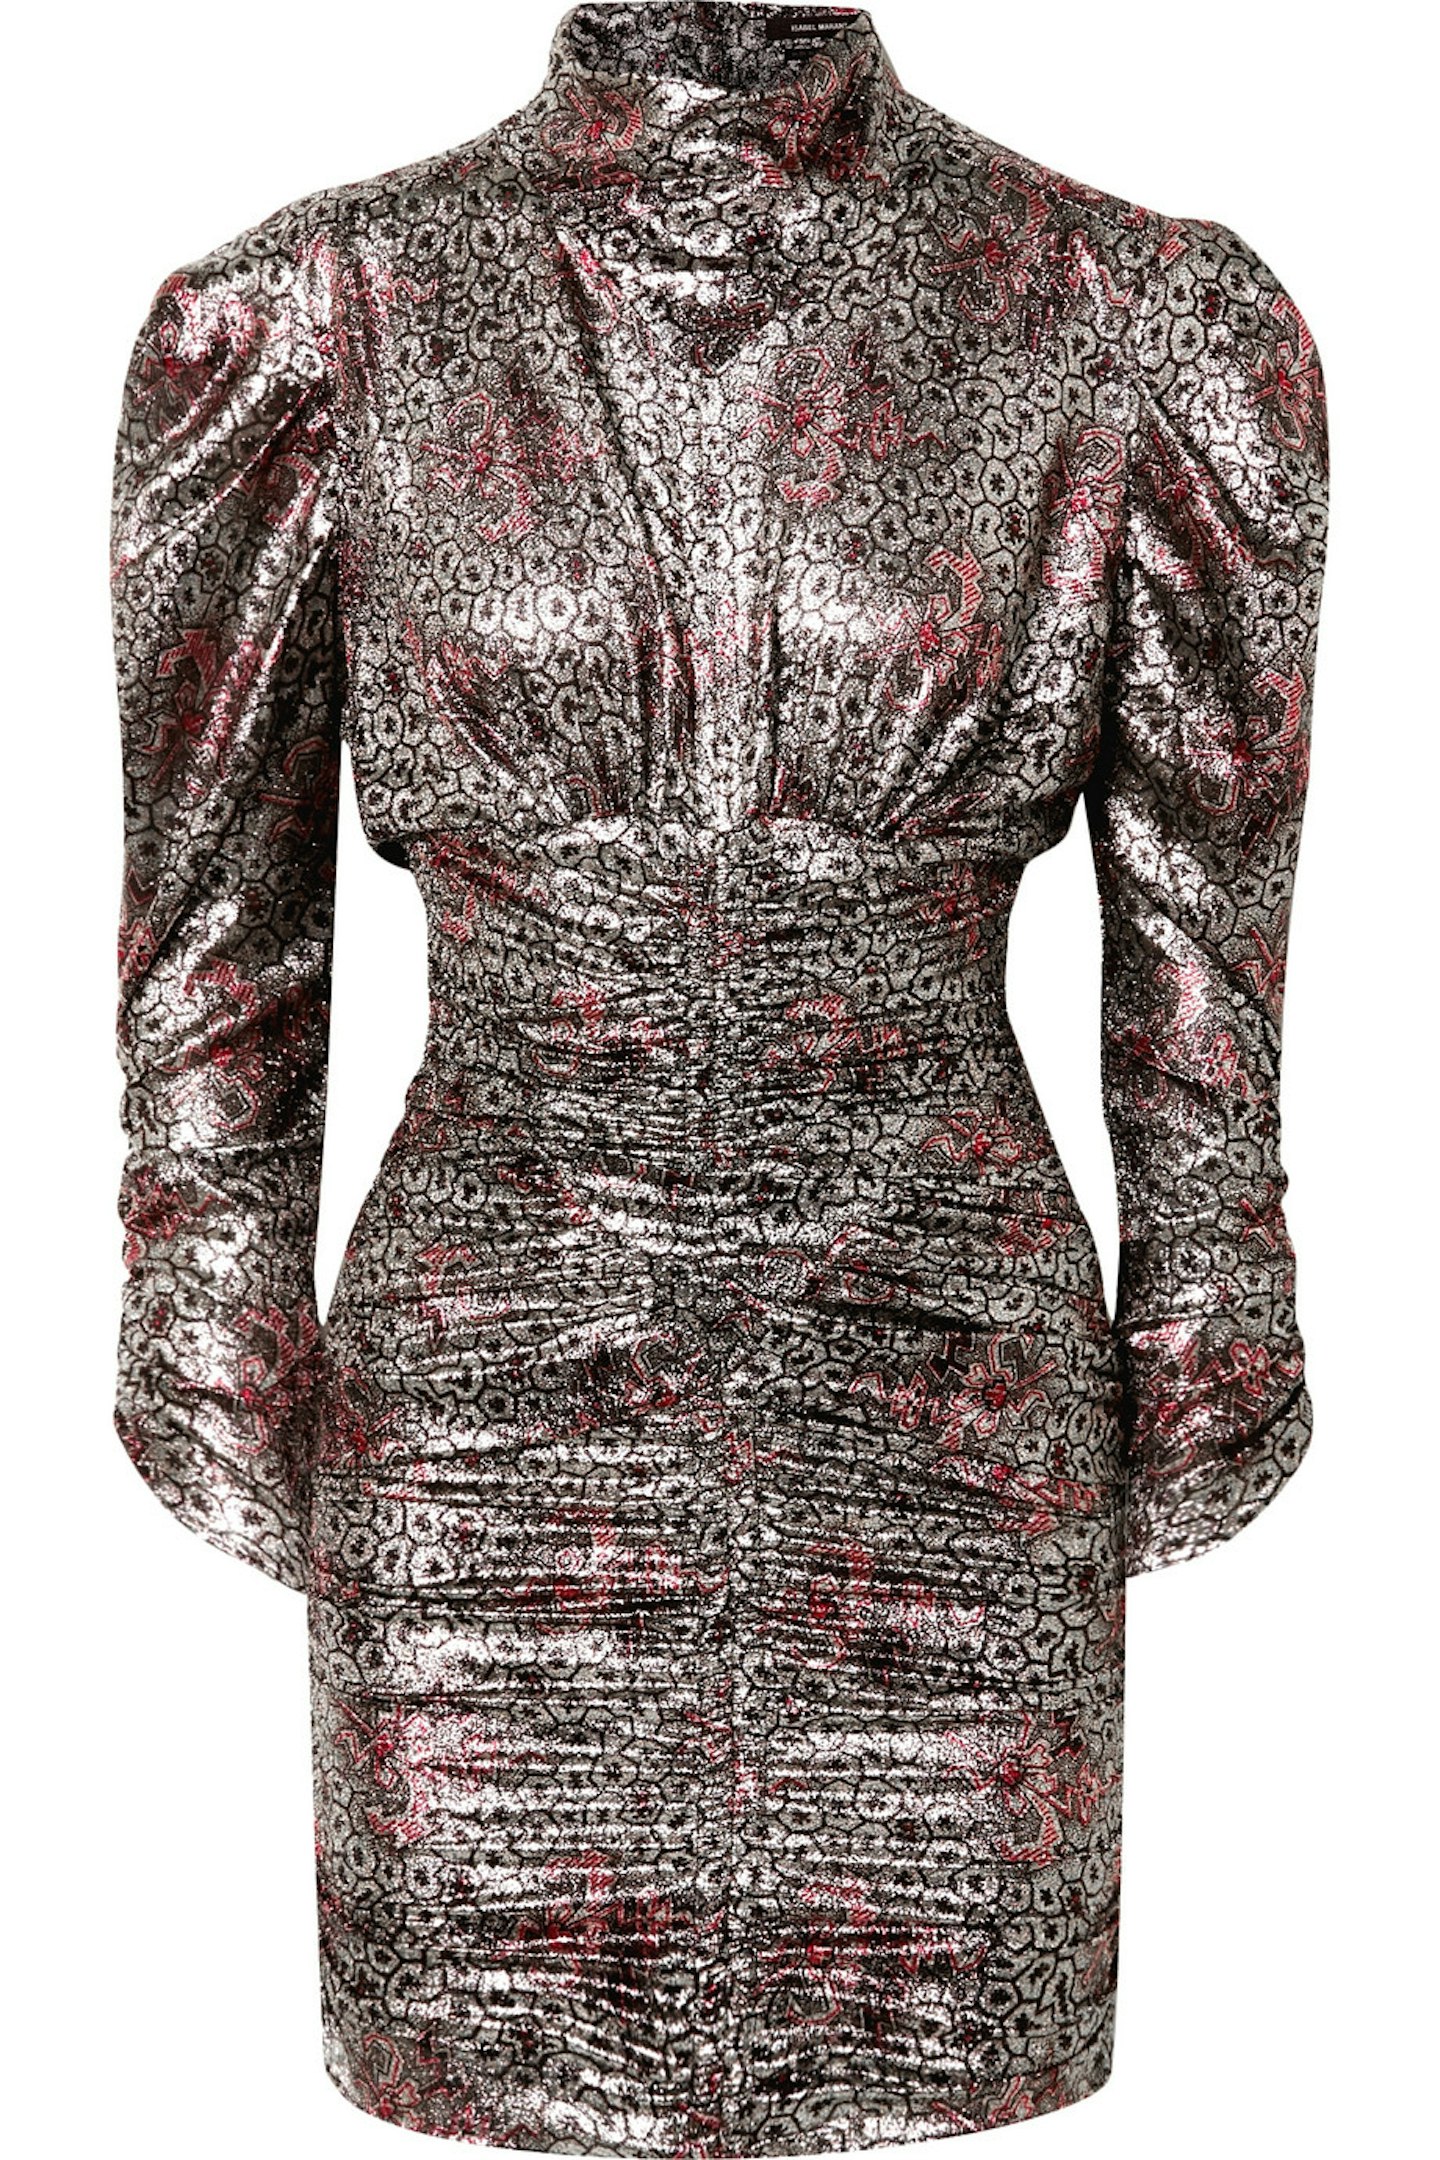 Isabel Marant, Pandor Ruched Printed Silk-Blend Lame Mini Dress, £960, Net-A-Porter